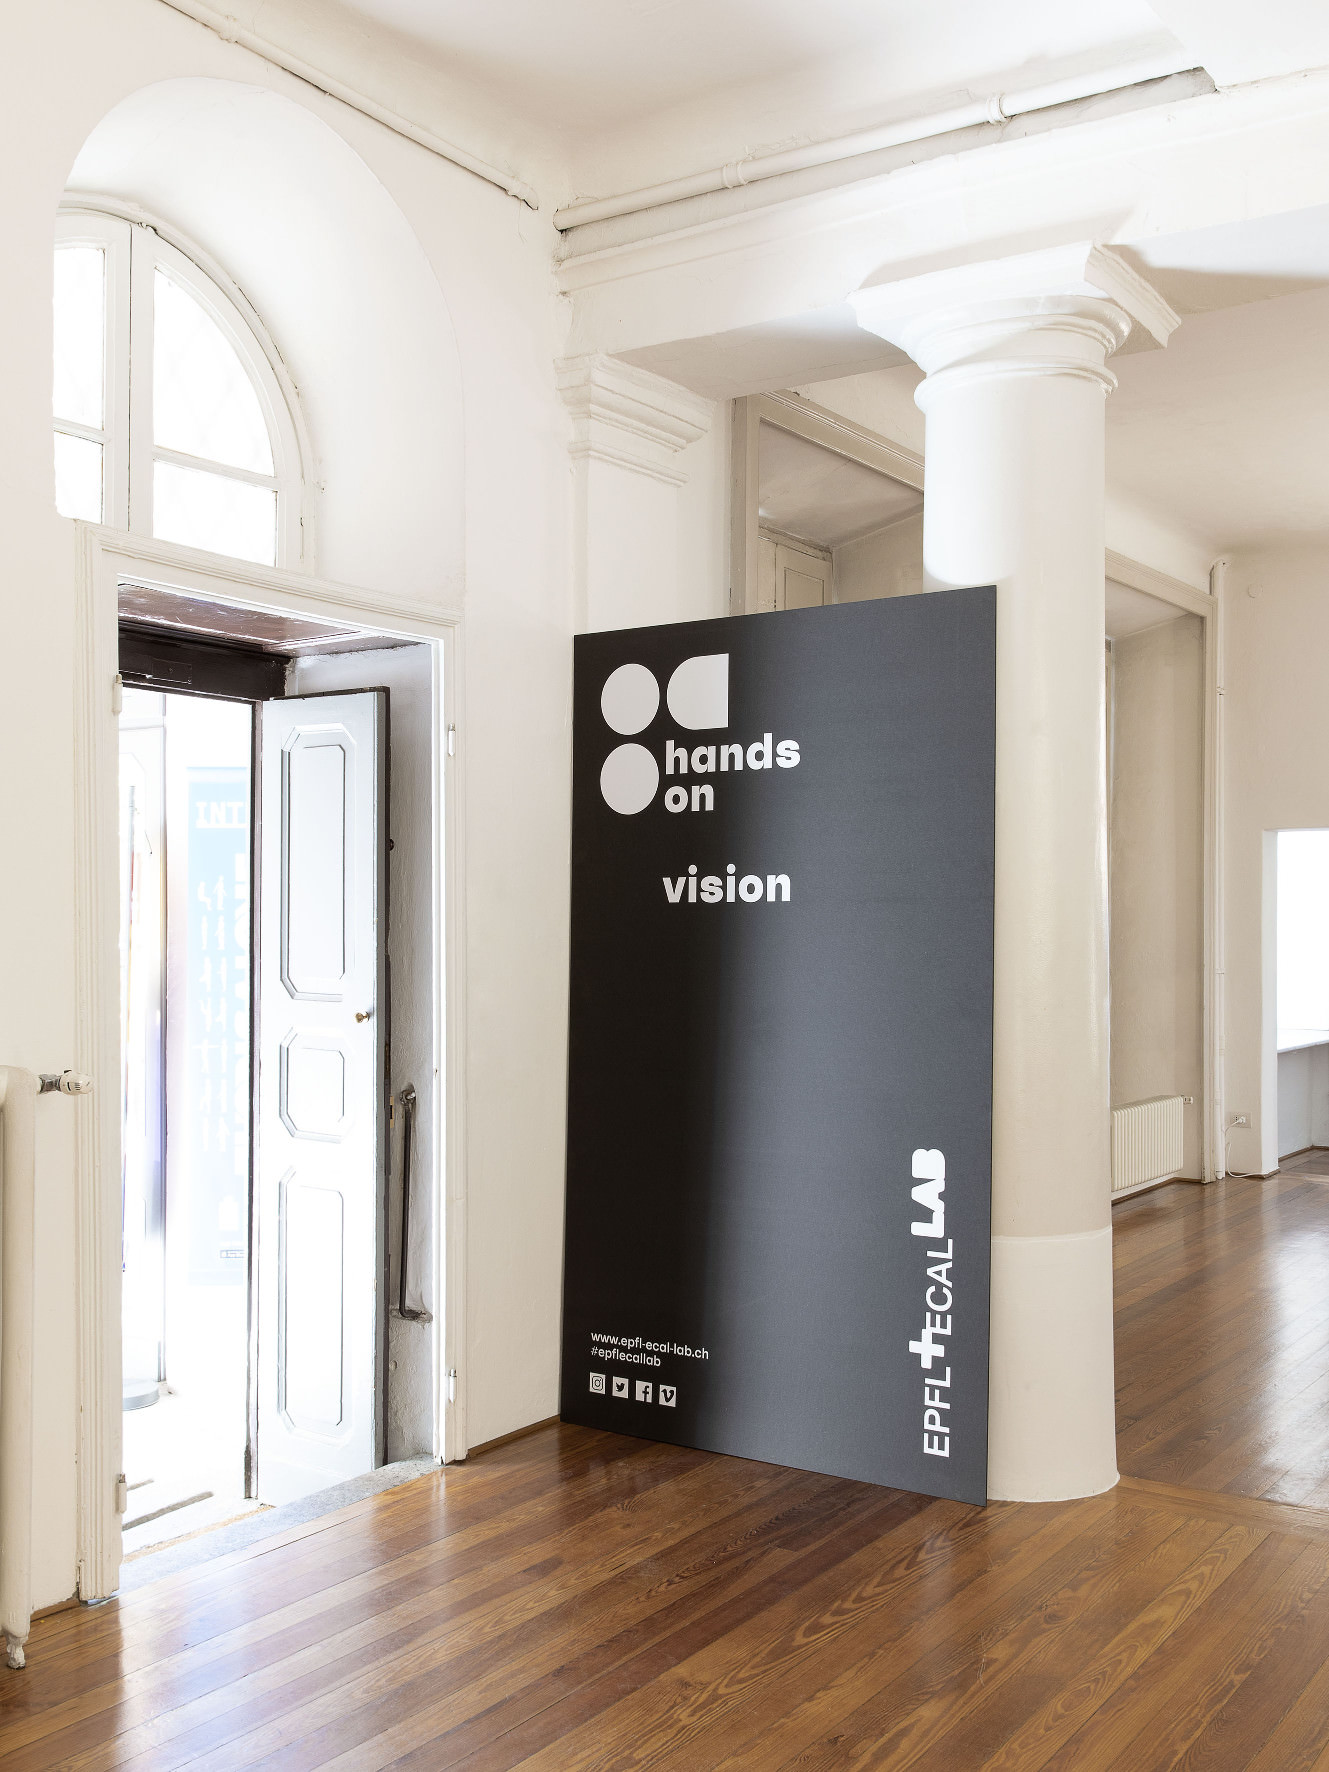 McQueen Display typeface in use at Milan Design Week 2019